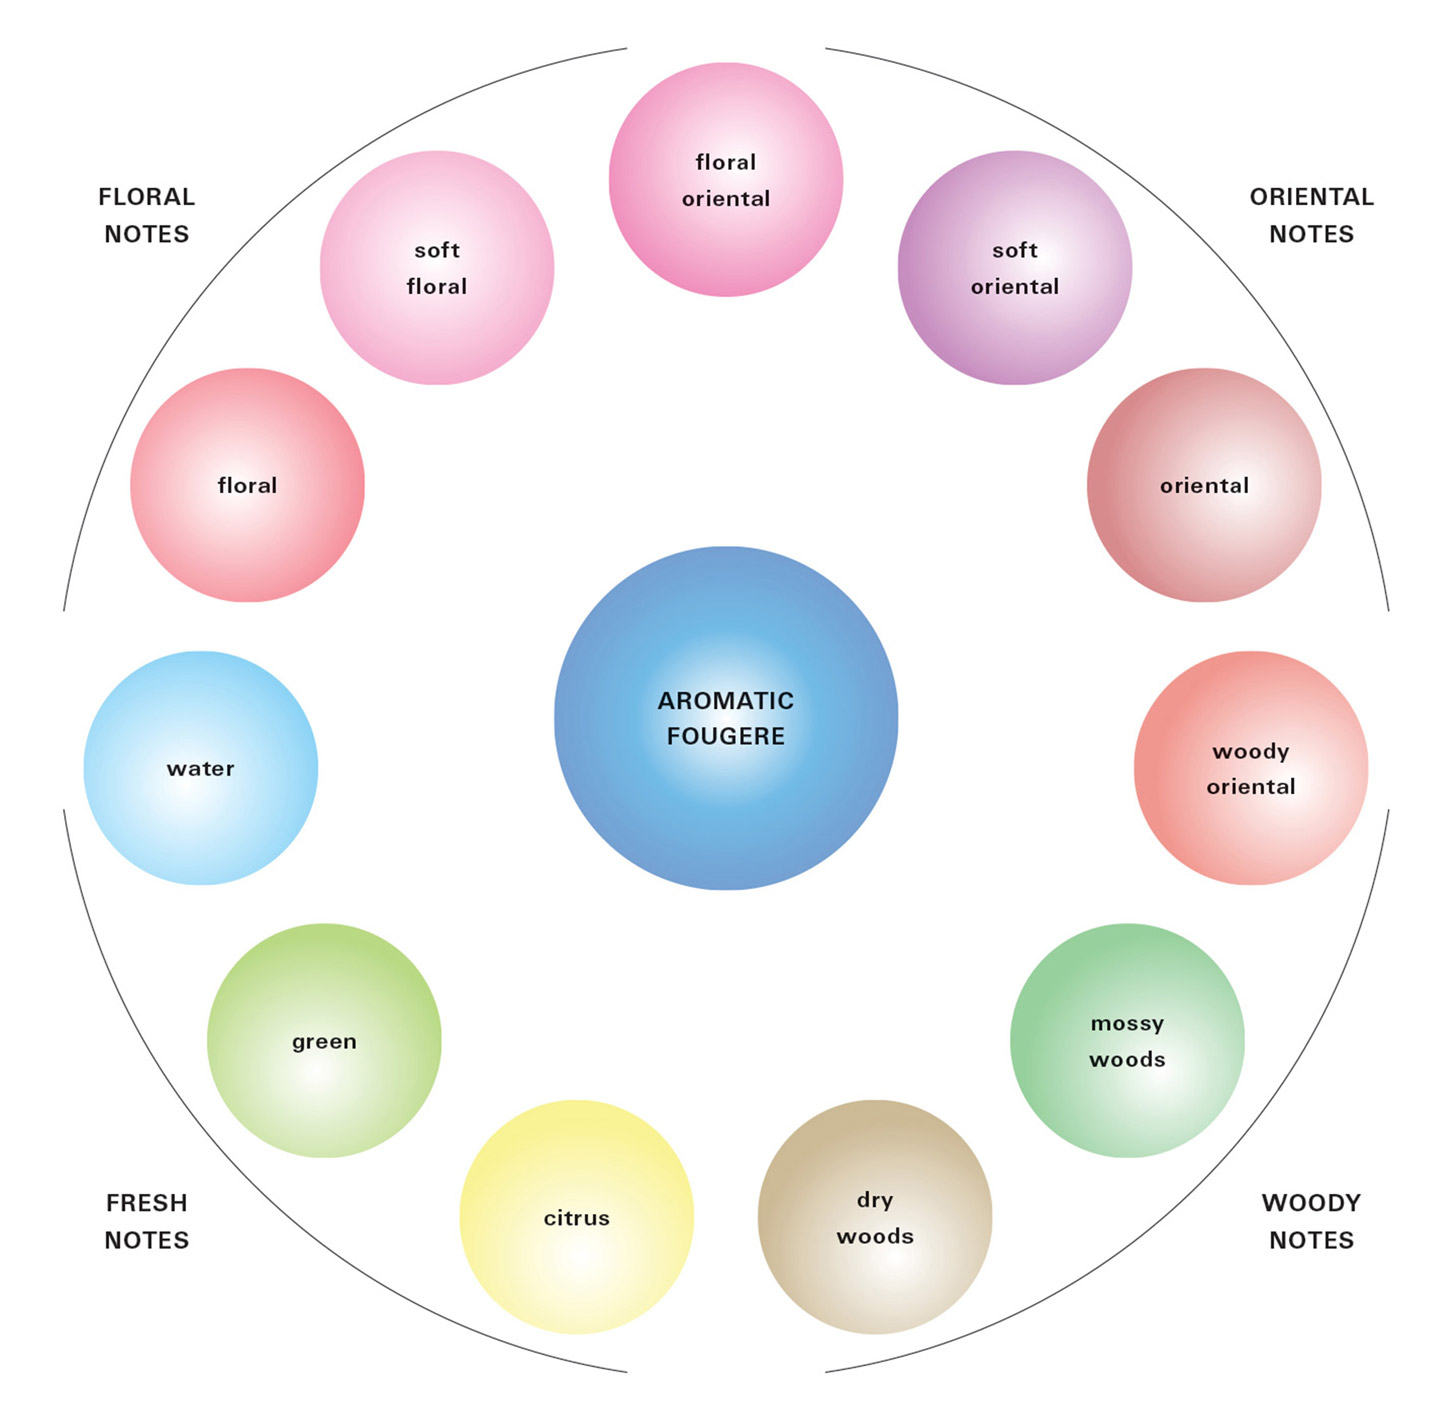 Fragrance Wheel Perfume Classification Chart